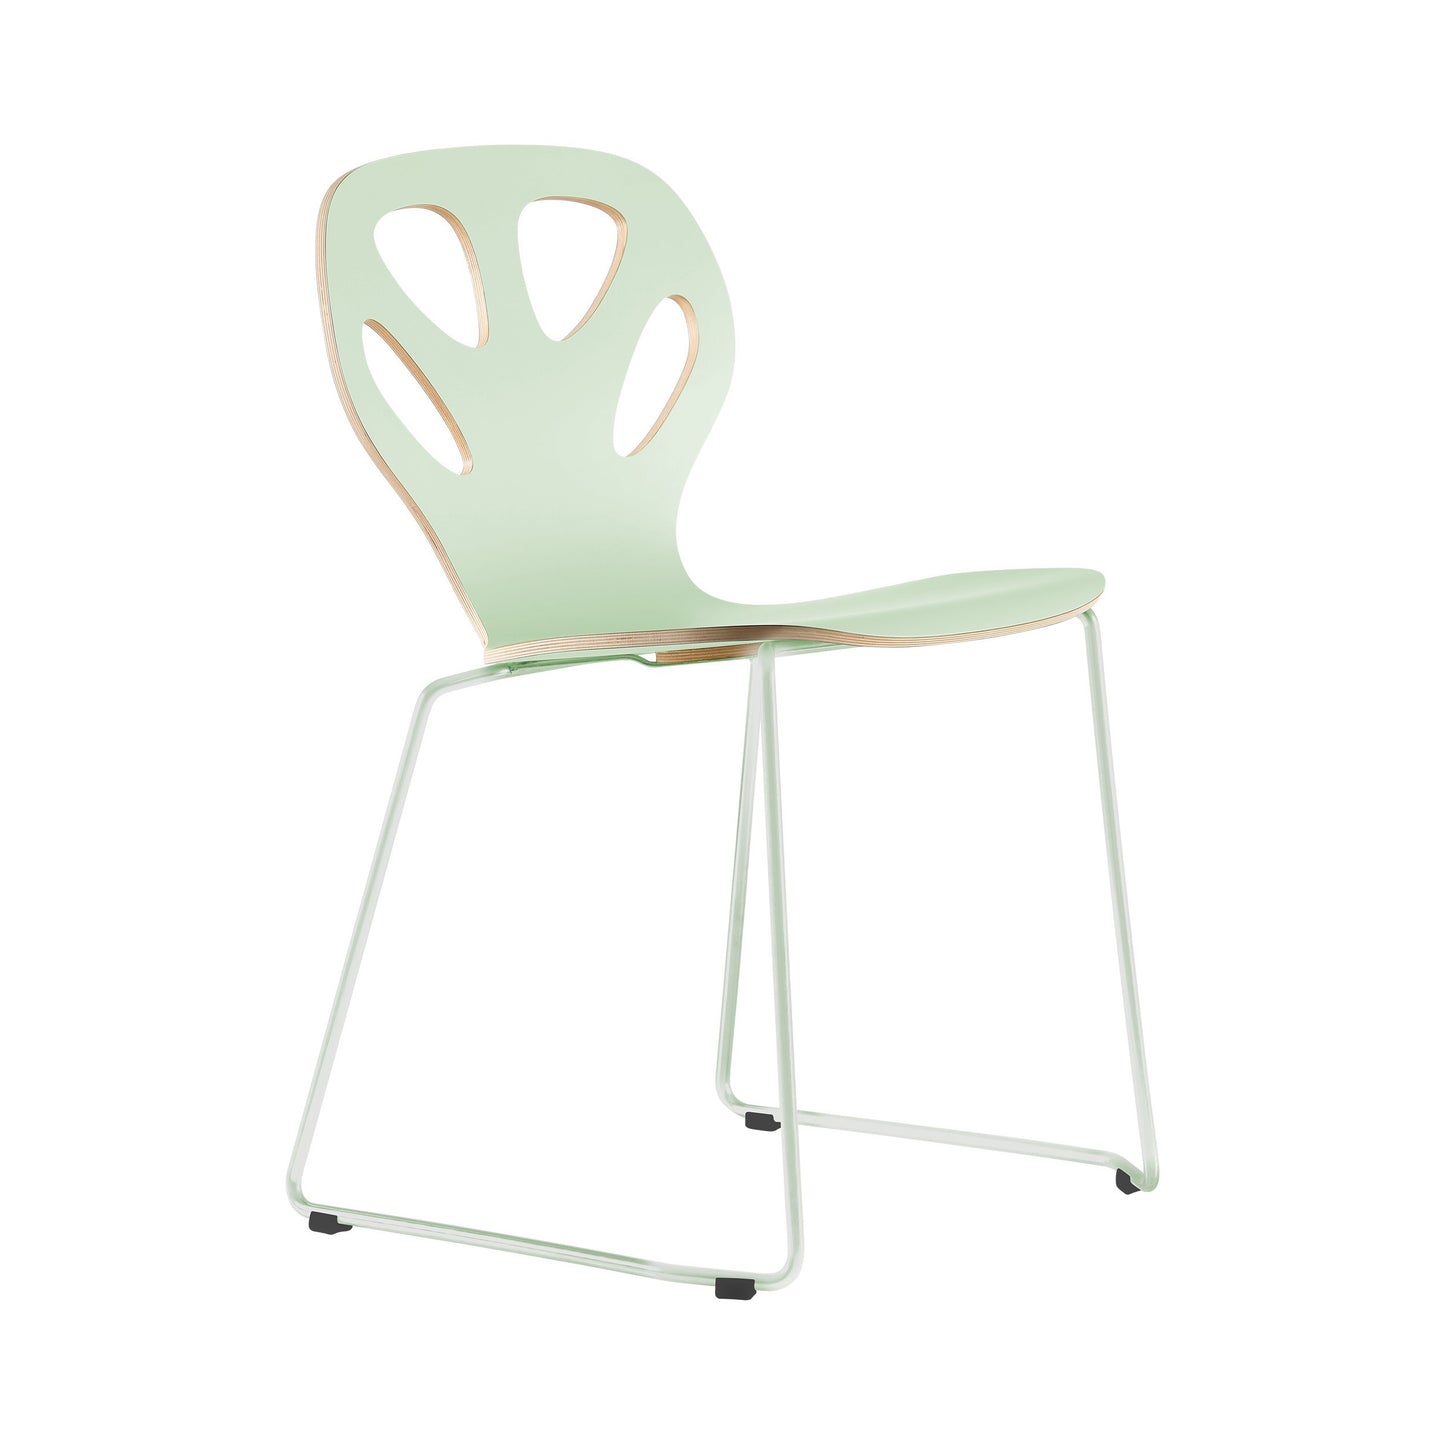 Chair Maple M01 - Mint